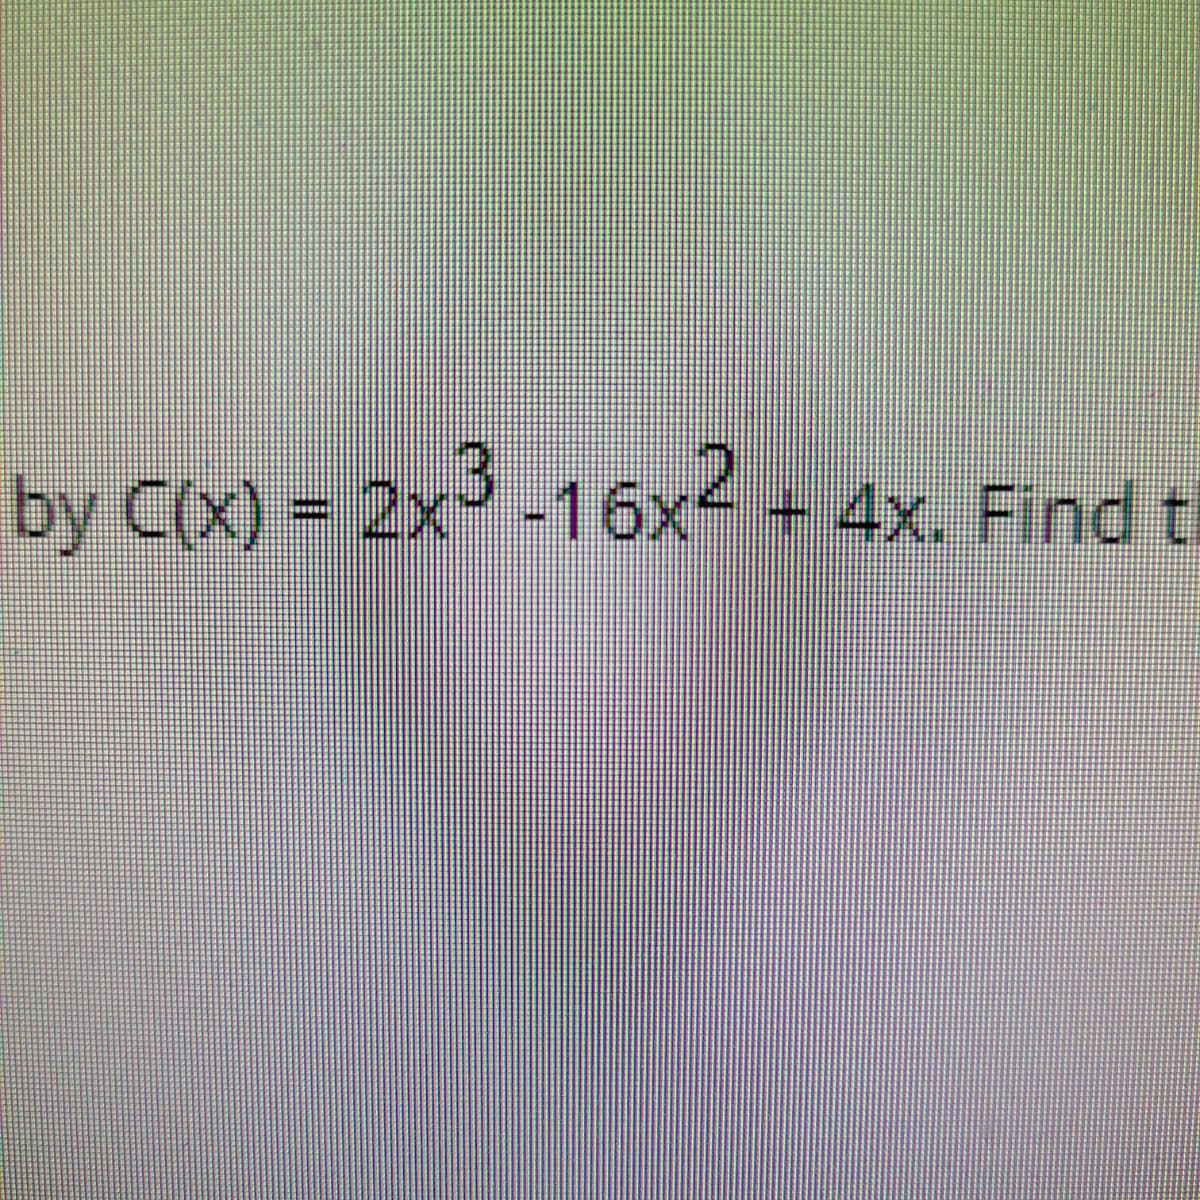 by C(x) = 2x³ -16x² + 4x. Find t